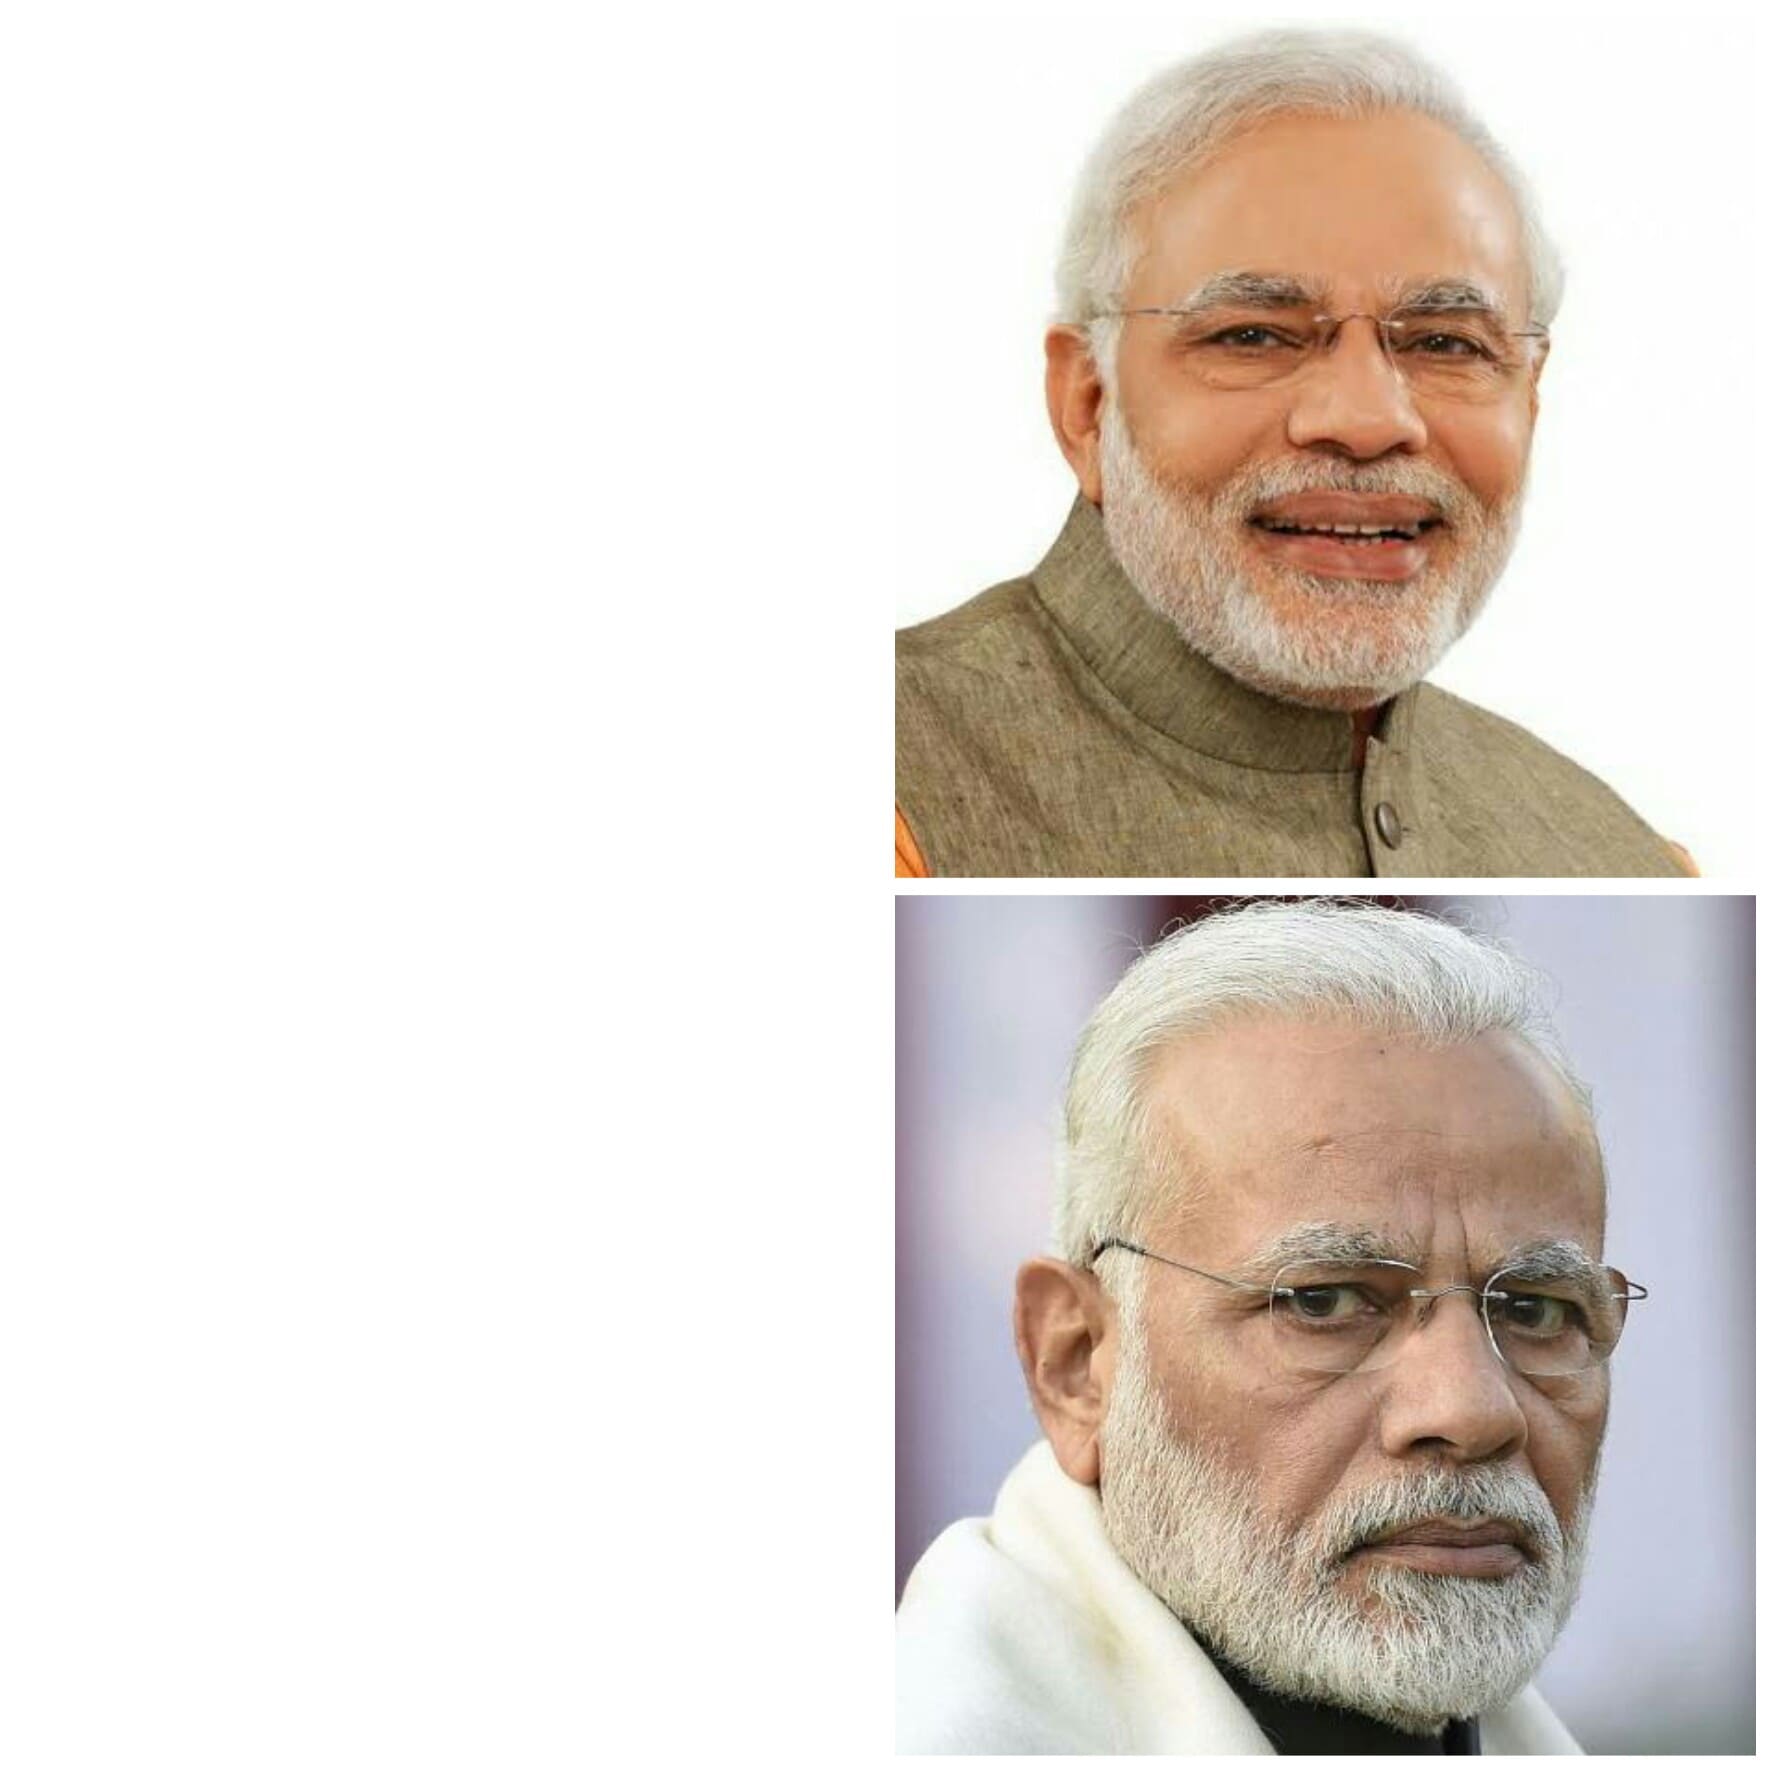 Modi Funny Photos And Meme Templates - Indian Meme Templates